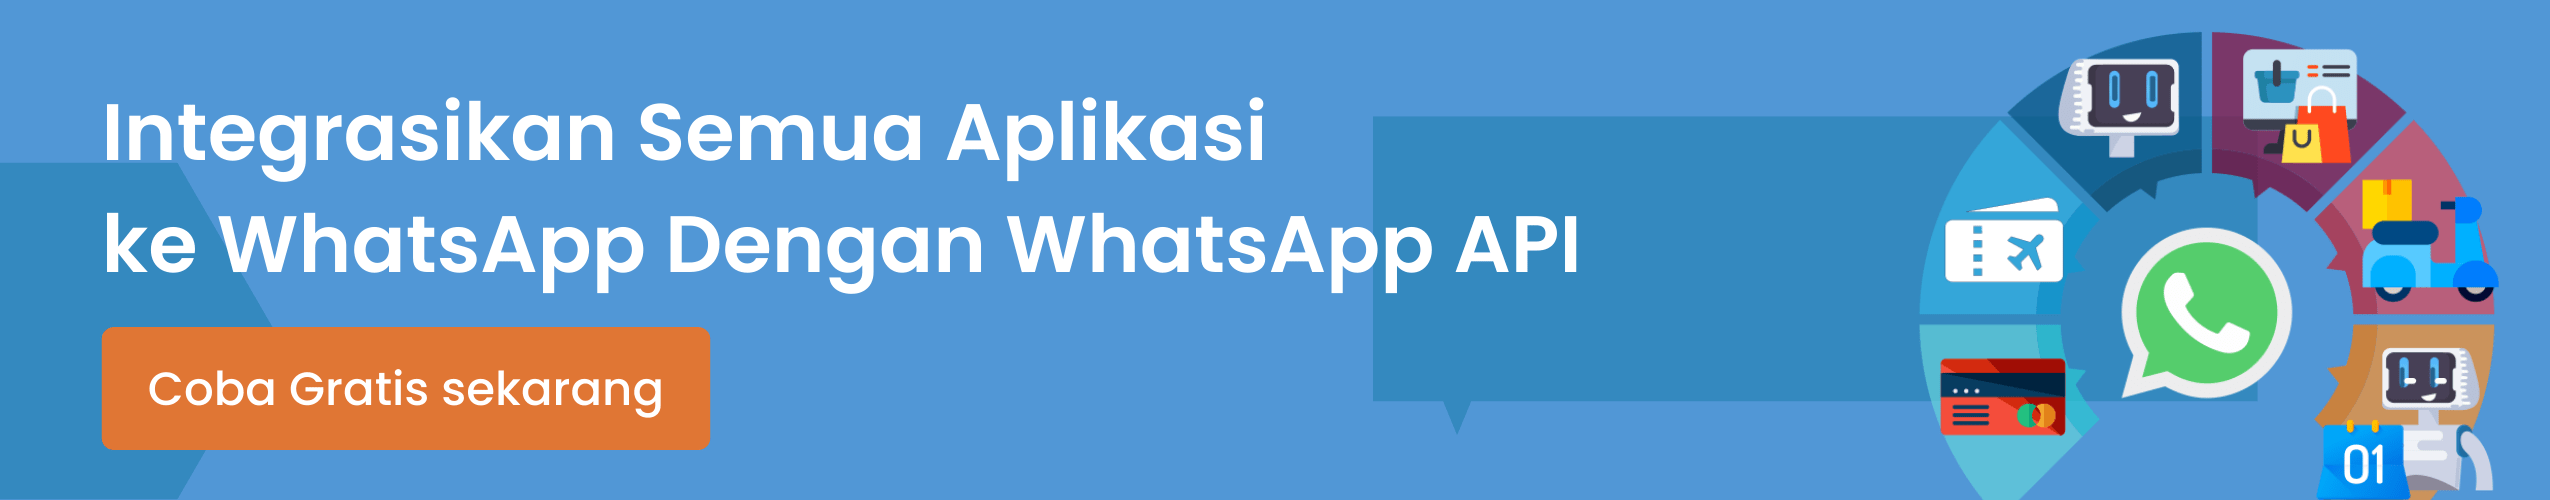 Dapatkan Chatbot WhatsApp Dengan WhatsApp Business API dari Barantum